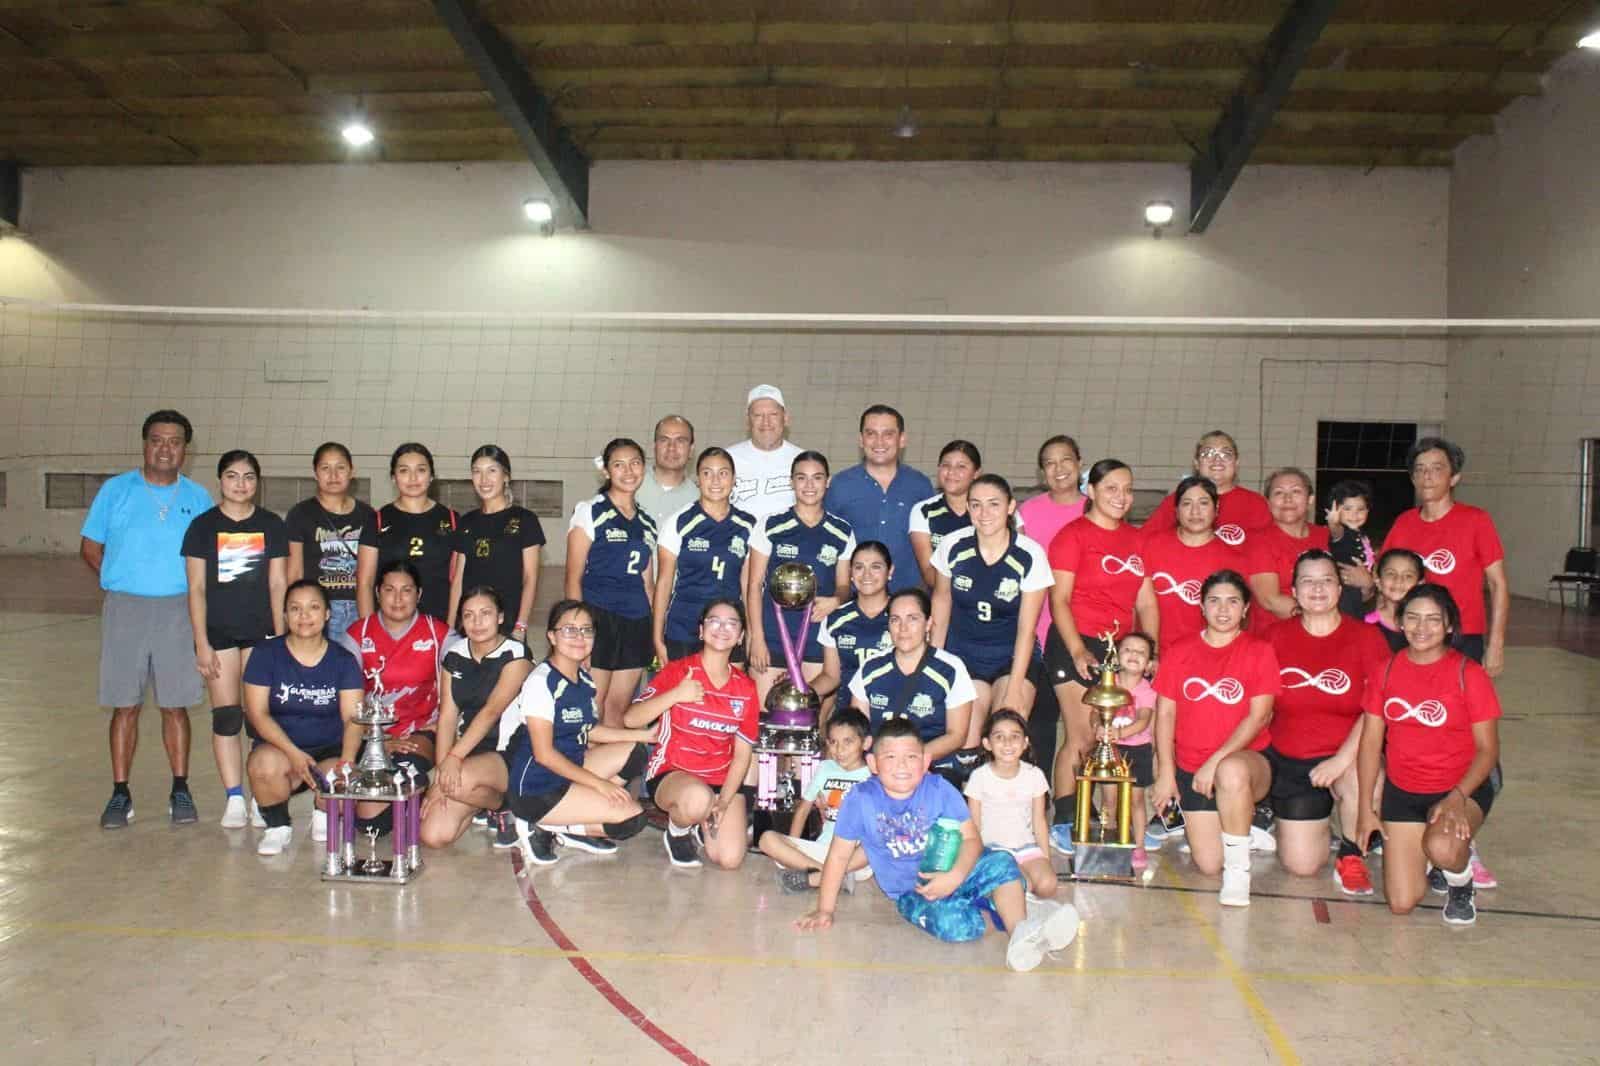 Culmina liga femenil de voleibol en Allende